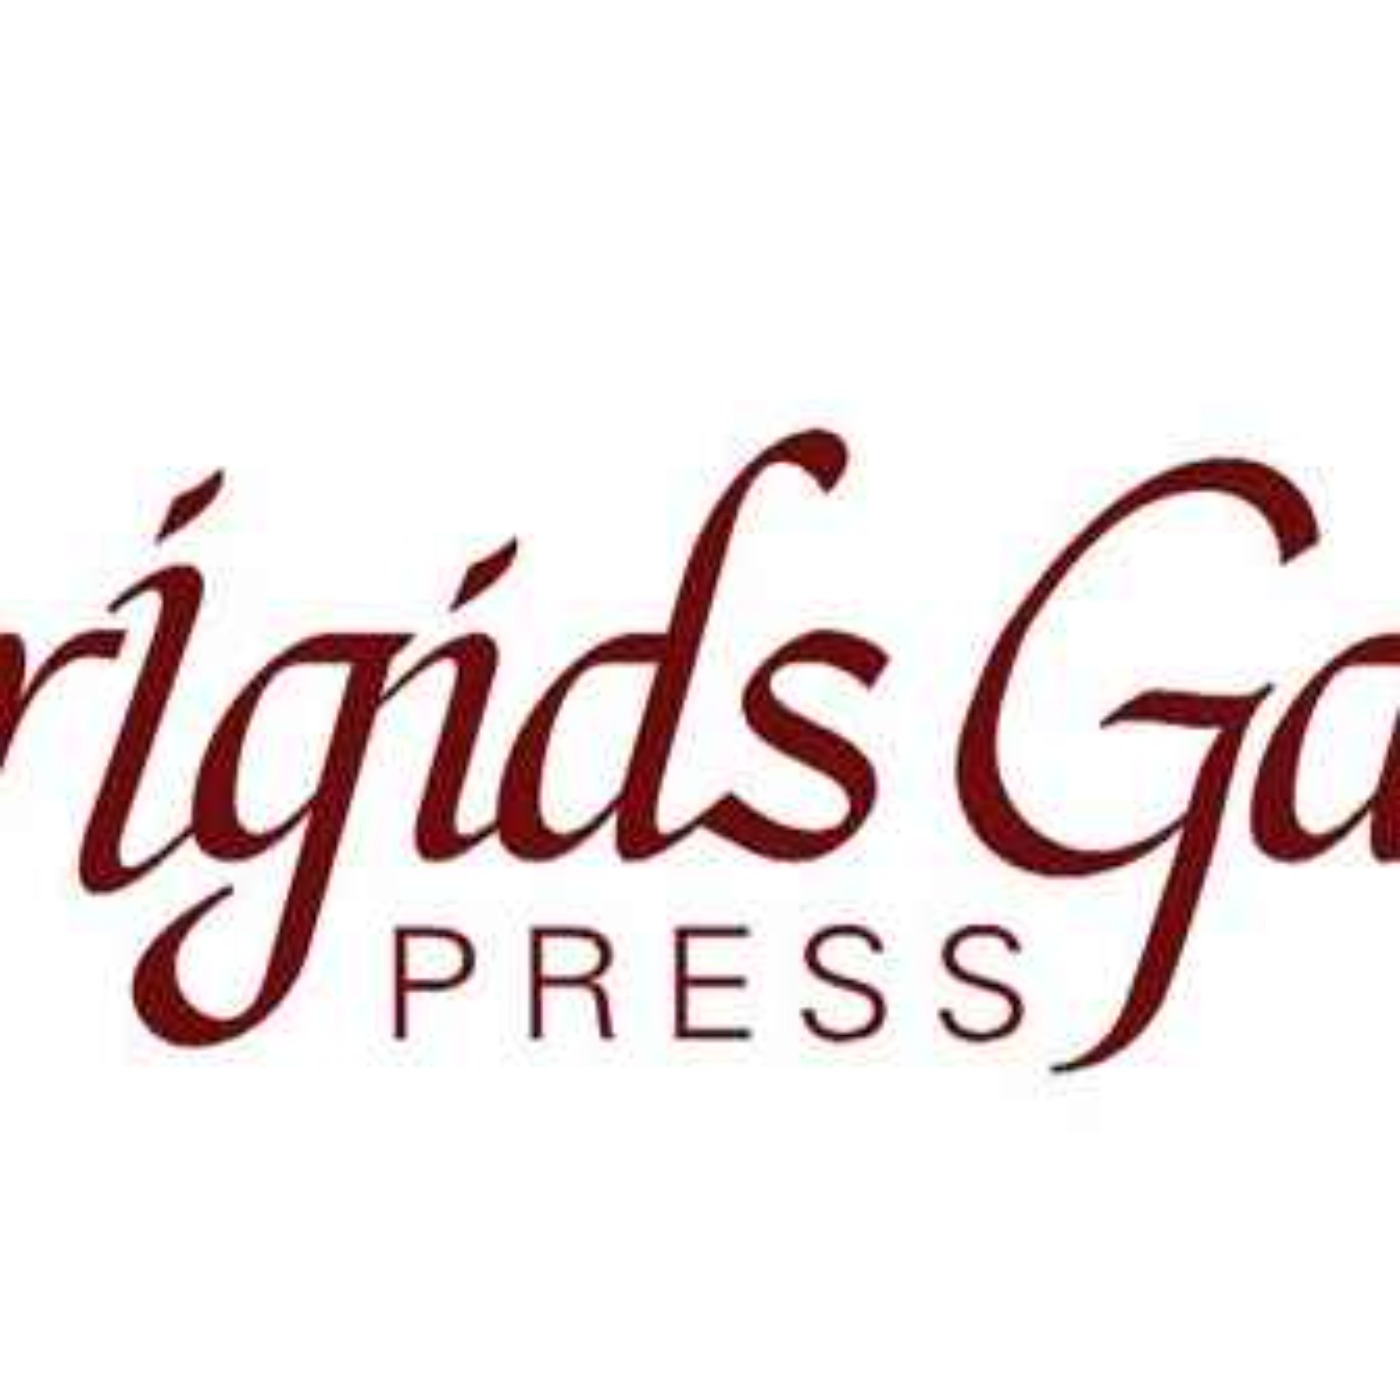 Brigid's Gate Press - Heather Ventura & S.D. Vassallo